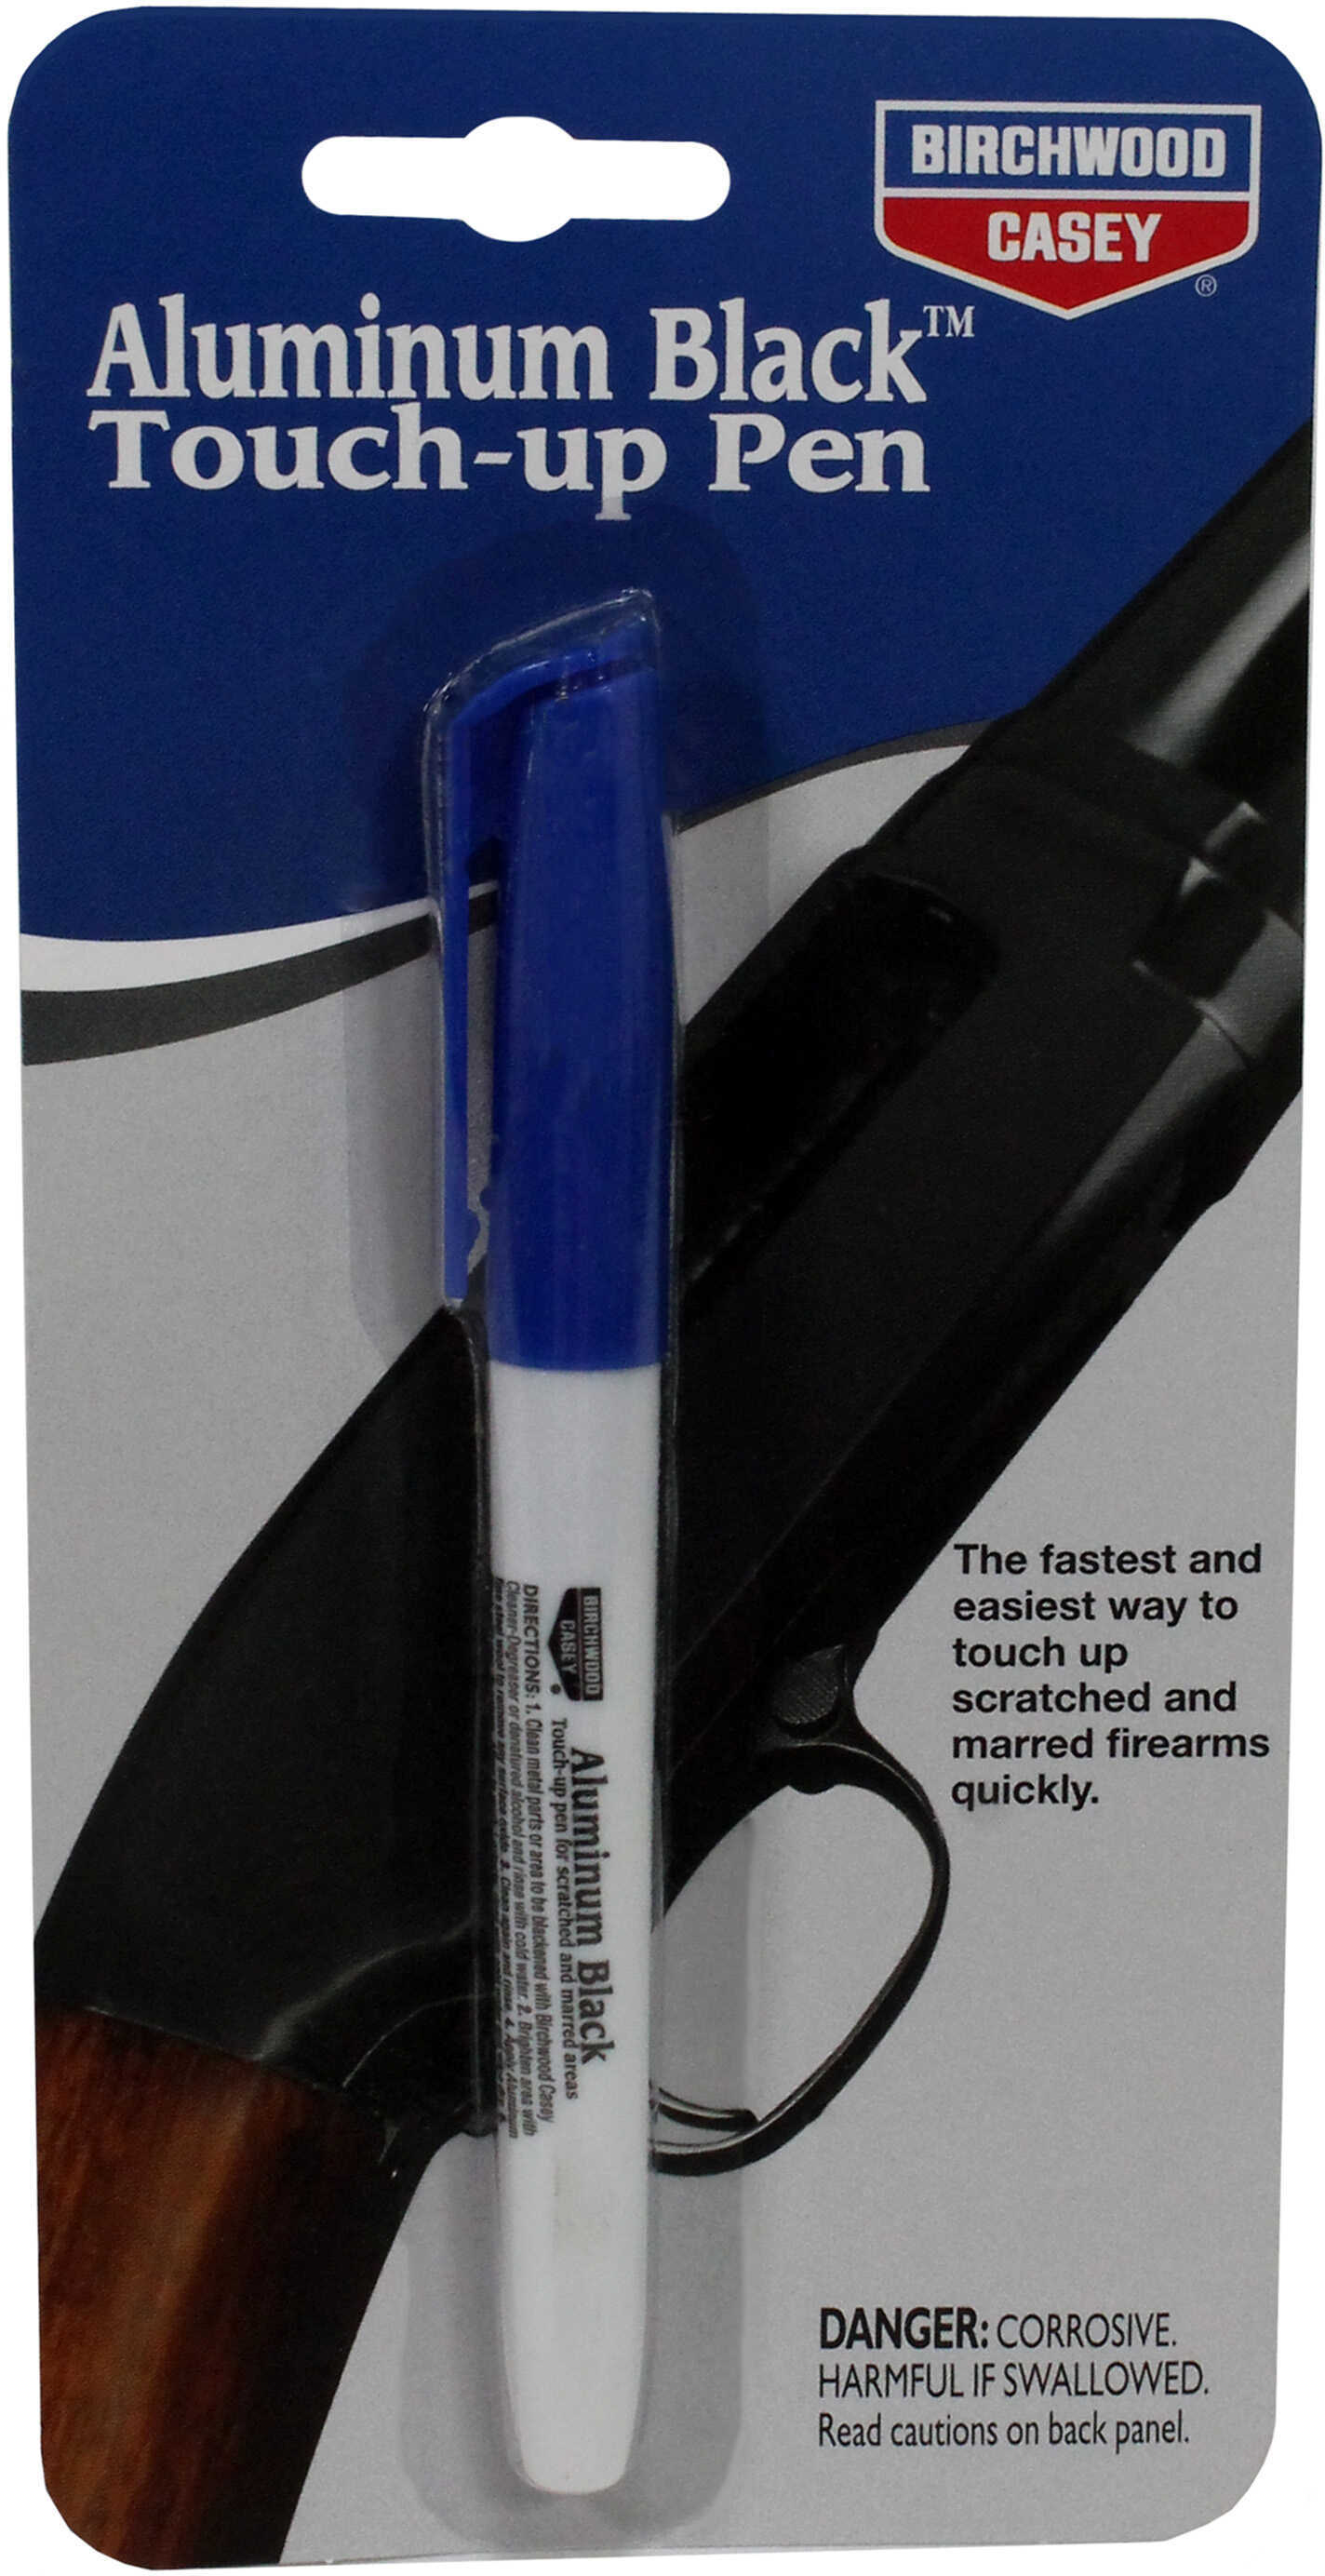 Birchwood Casey Aluminum Black Touch-Up Pen Applicator Md: 15121